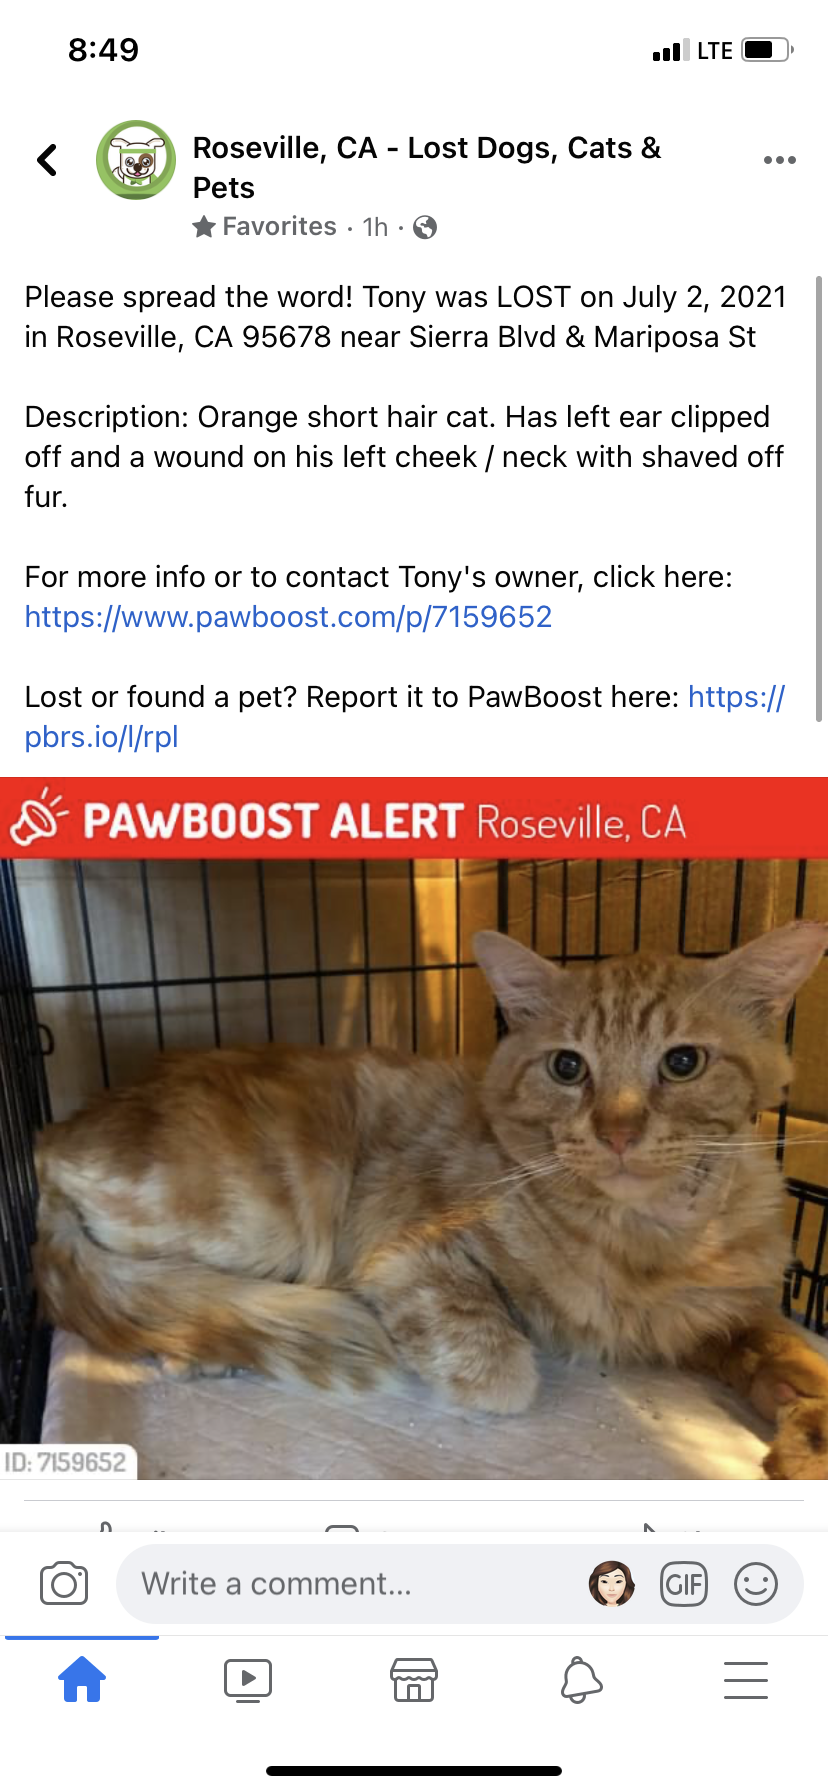 Image of Tony, Lost Cat